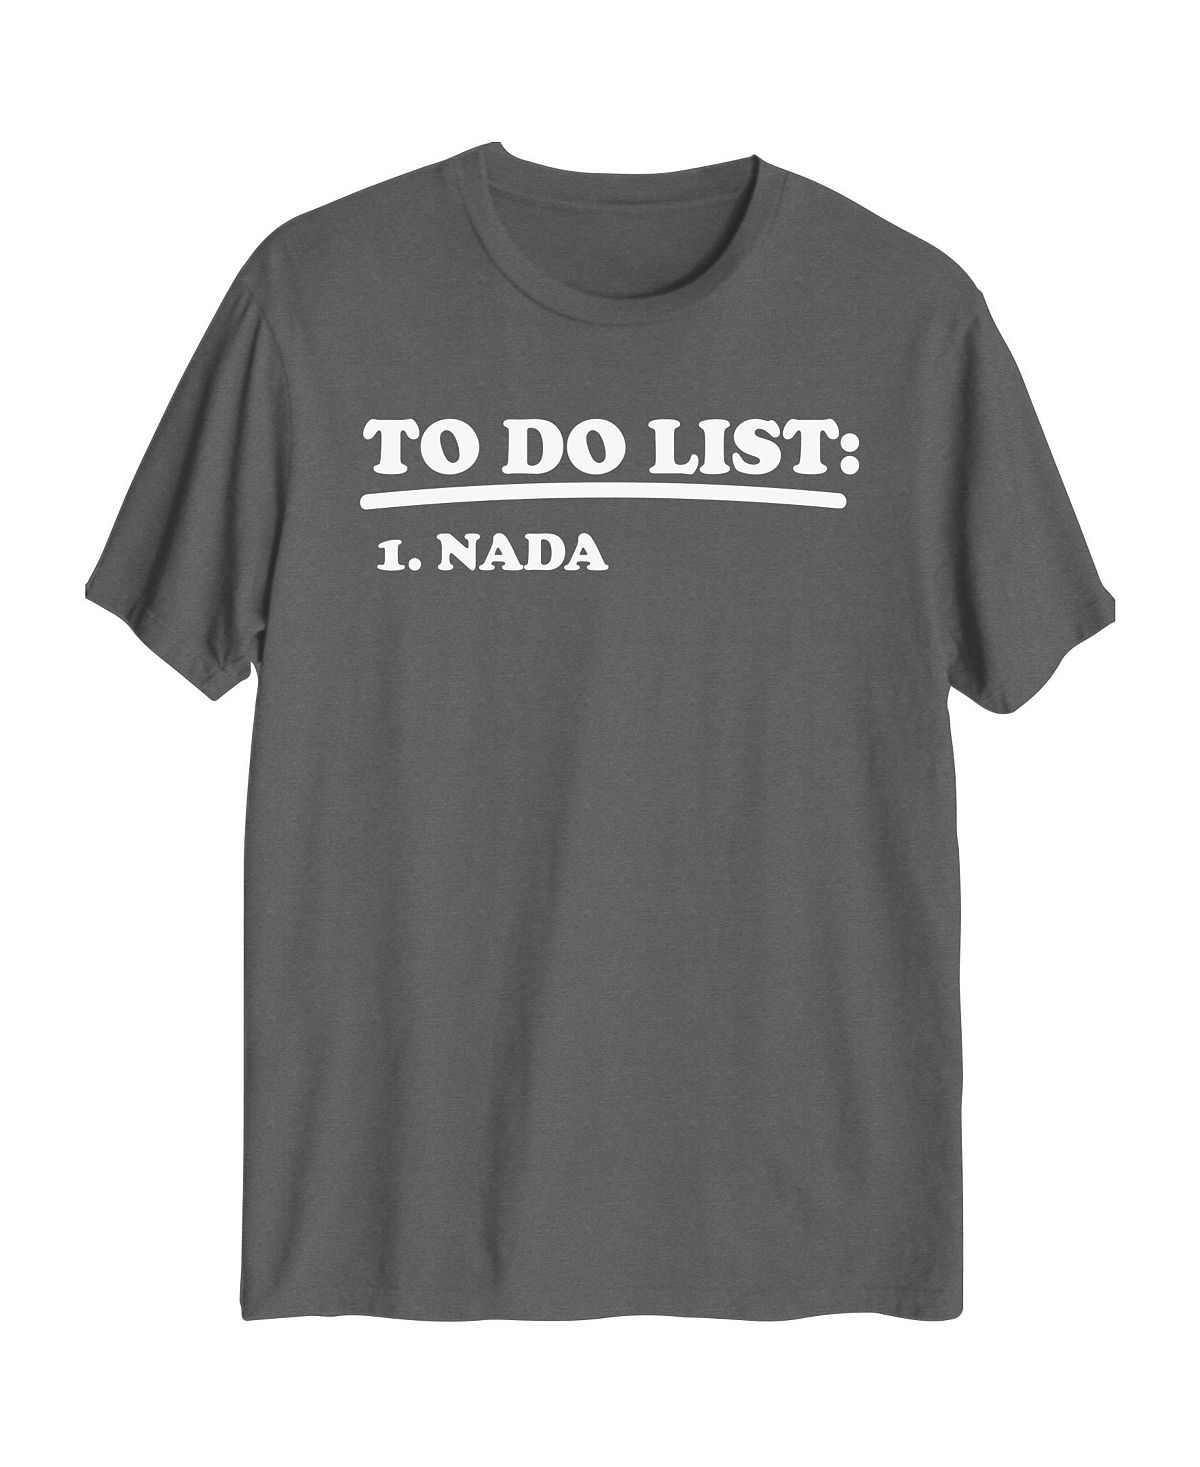 Мужская гибридная футболка с рисунком Nada AIRWAVES мужская гибридная футболка с коротким рукавом football turkey nap с повторяющимся рисунком airwaves серый